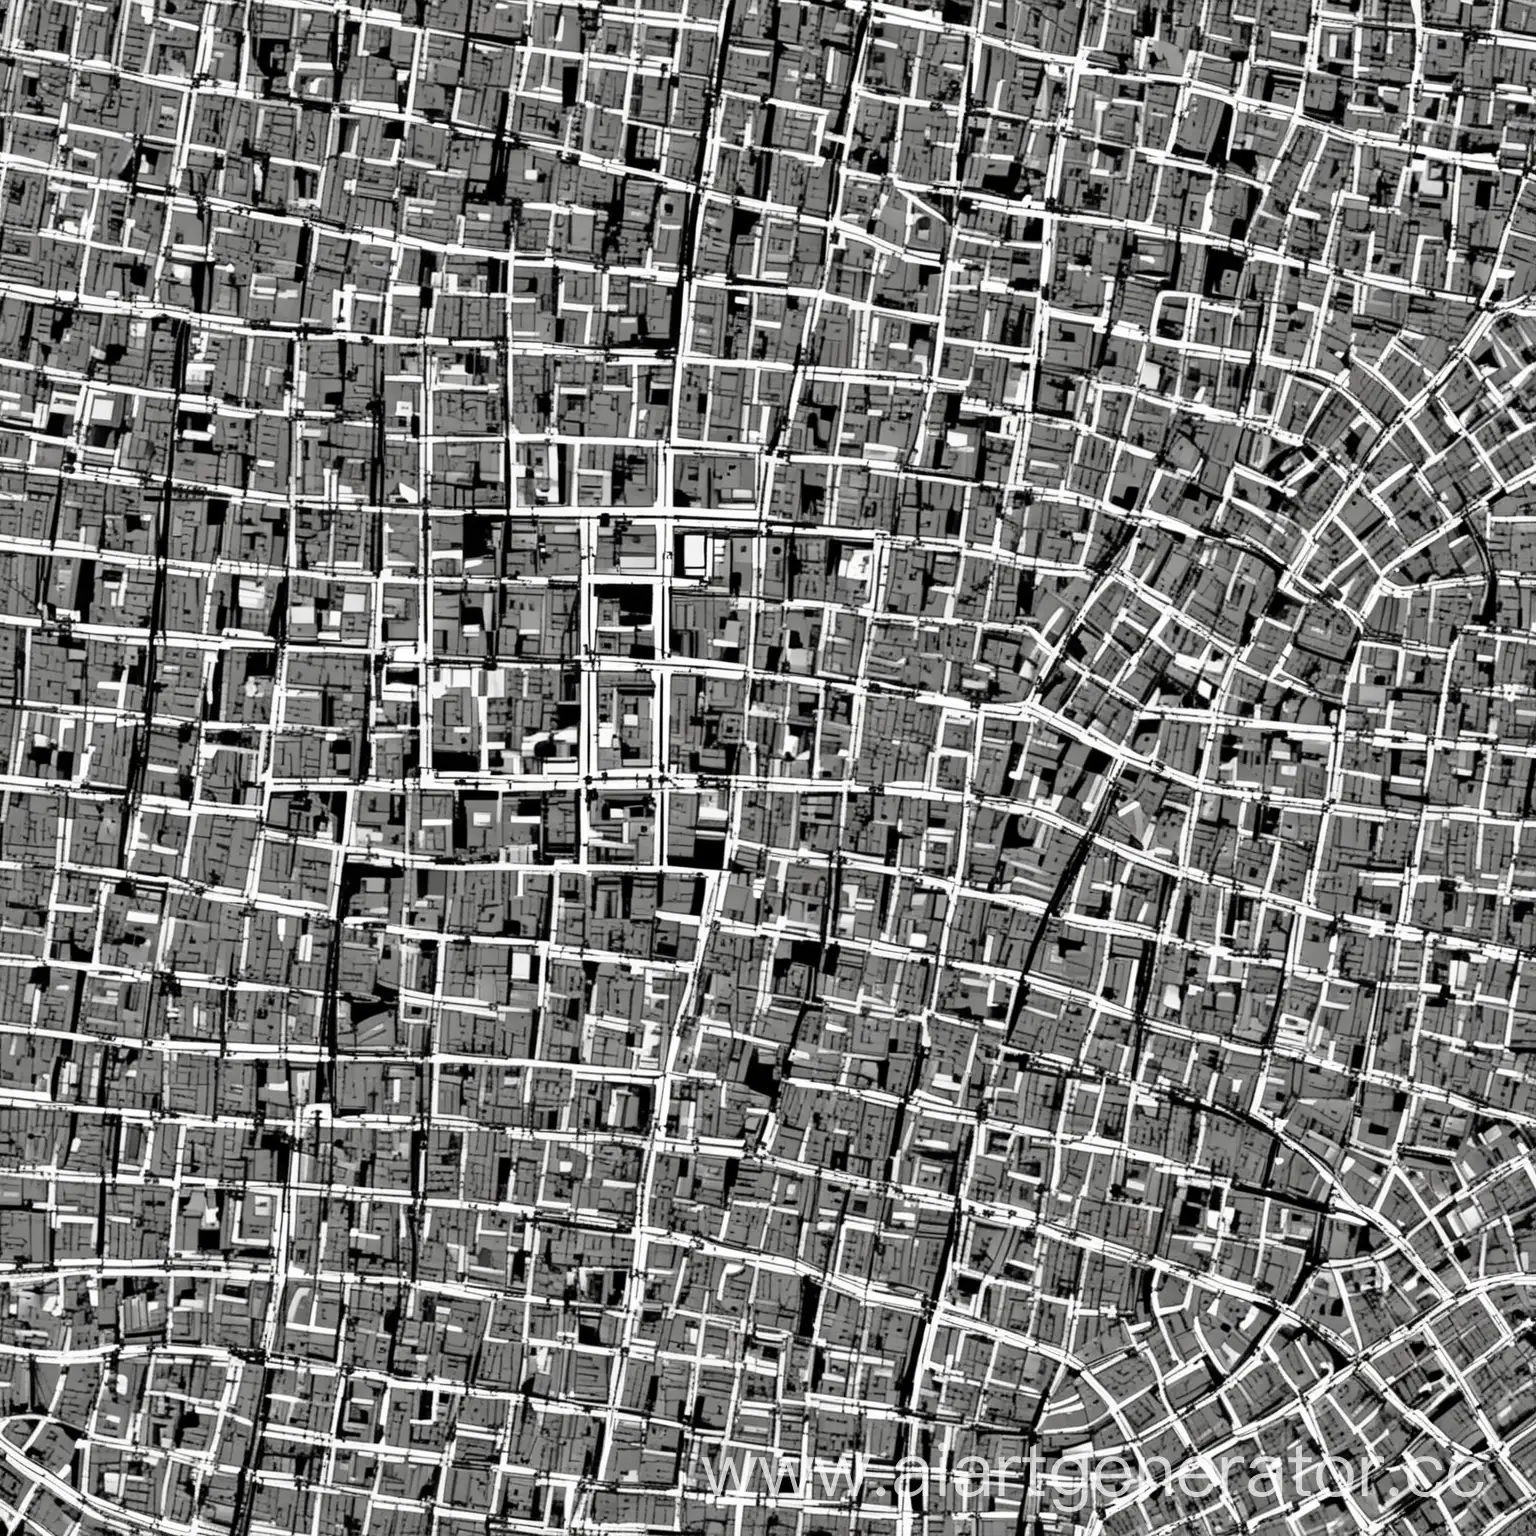 Monochrome-Urban-Landscape-SquareShaped-Houses-Map